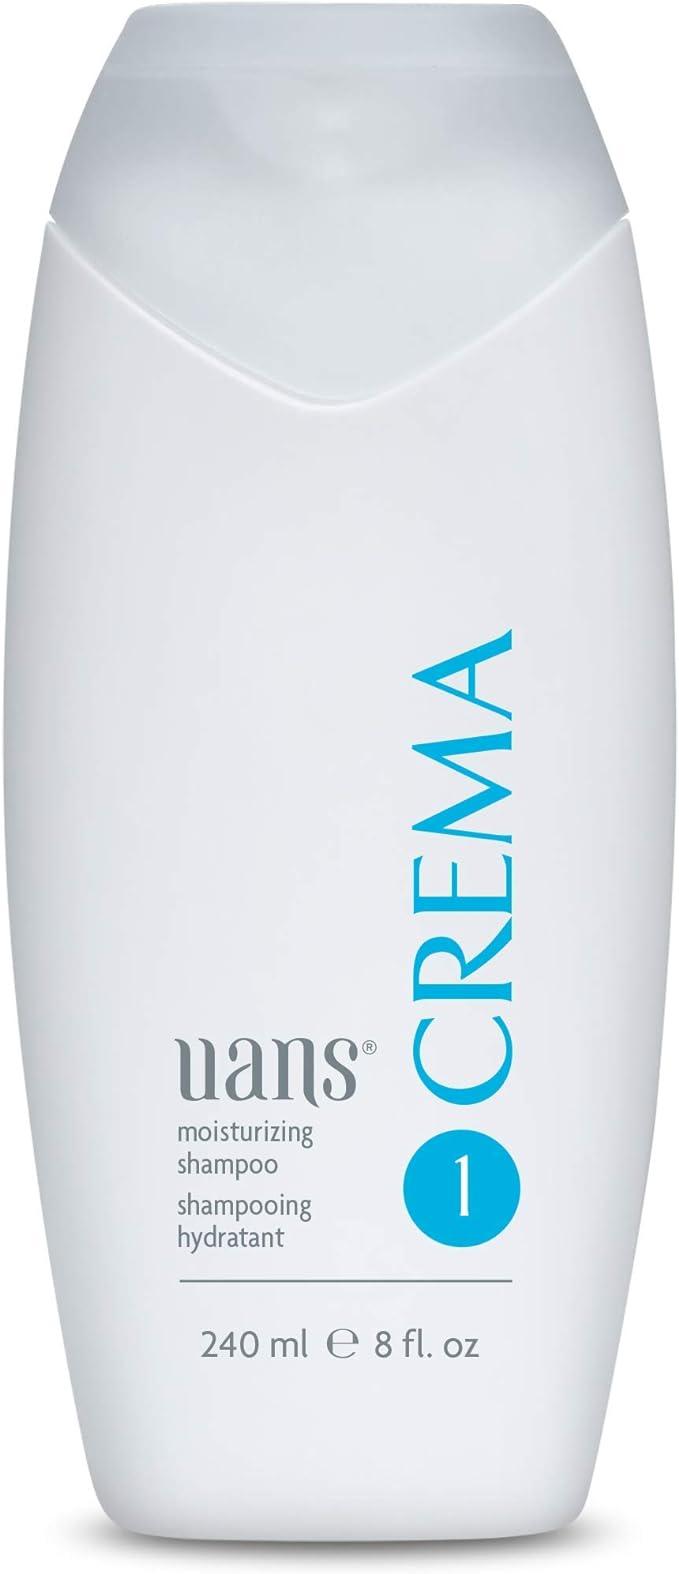 ‎uans international crema moisture shampoo 240 ml  ‎uans international inc. ?b086t3b2jb